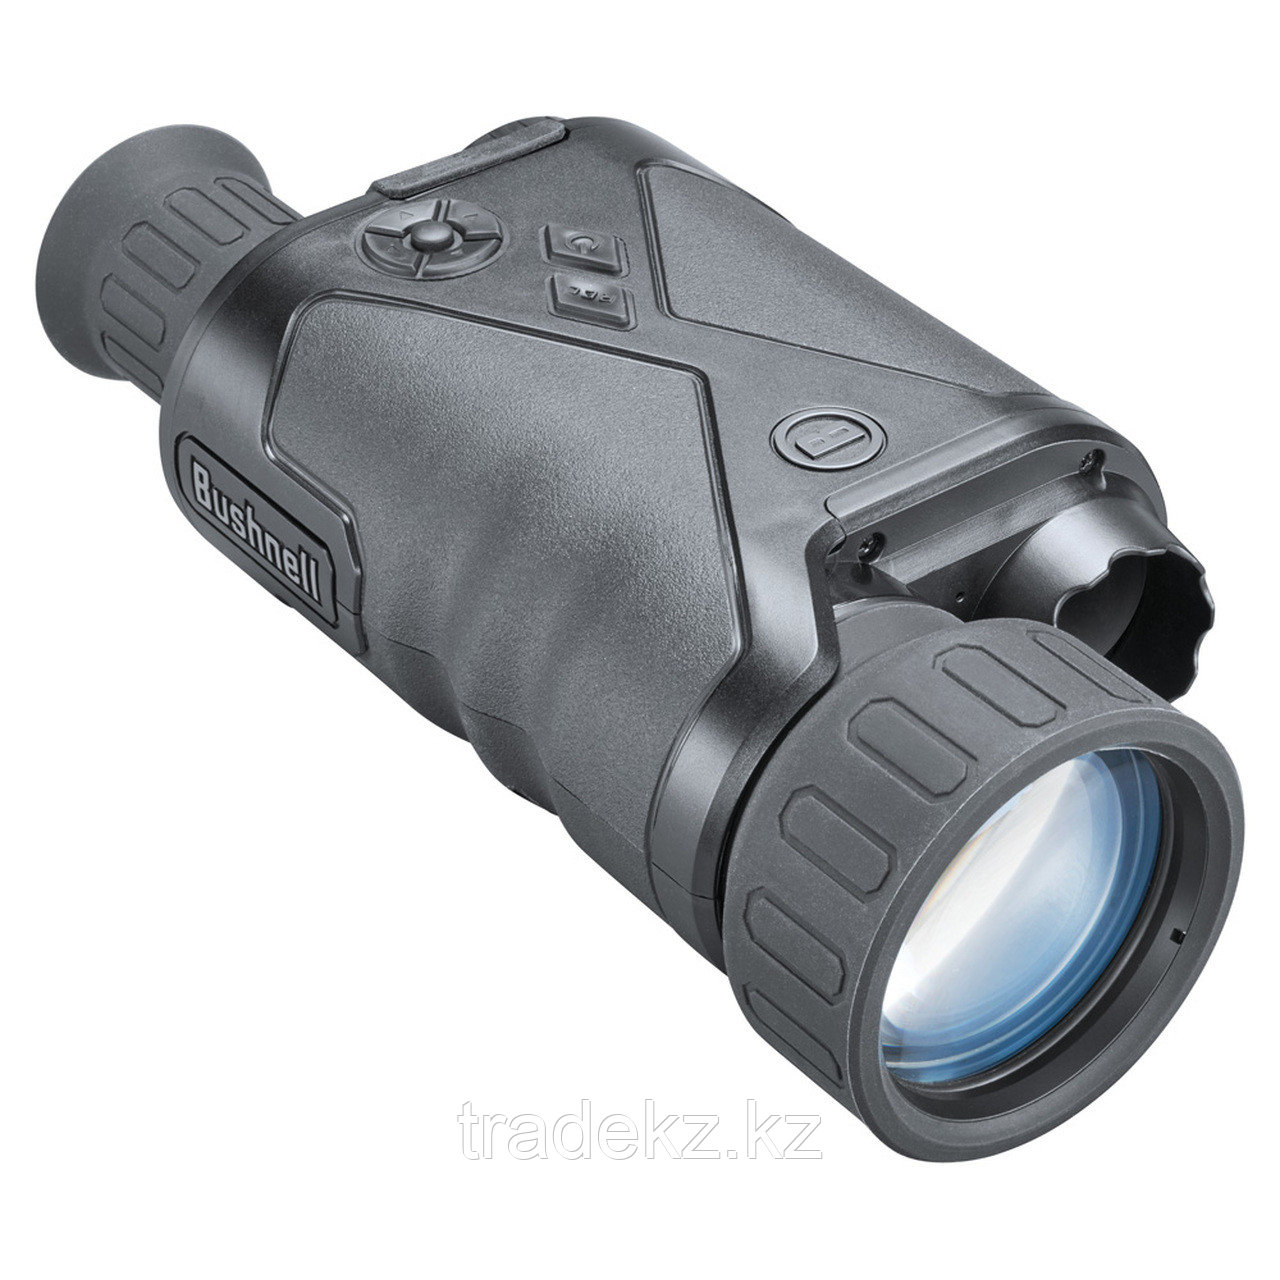 Монокуляр ночного видения BUSHNELL EQUINOX Z2 6X50 BLACK DIGITAL